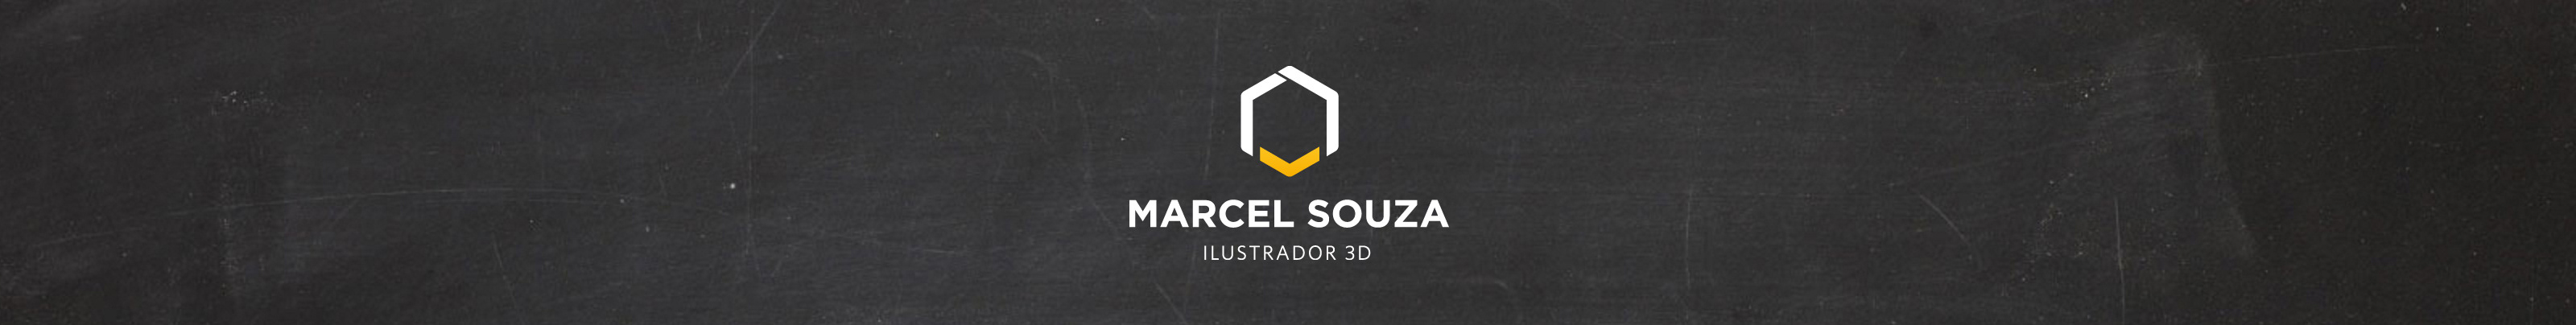 Marcel Souza's profile banner